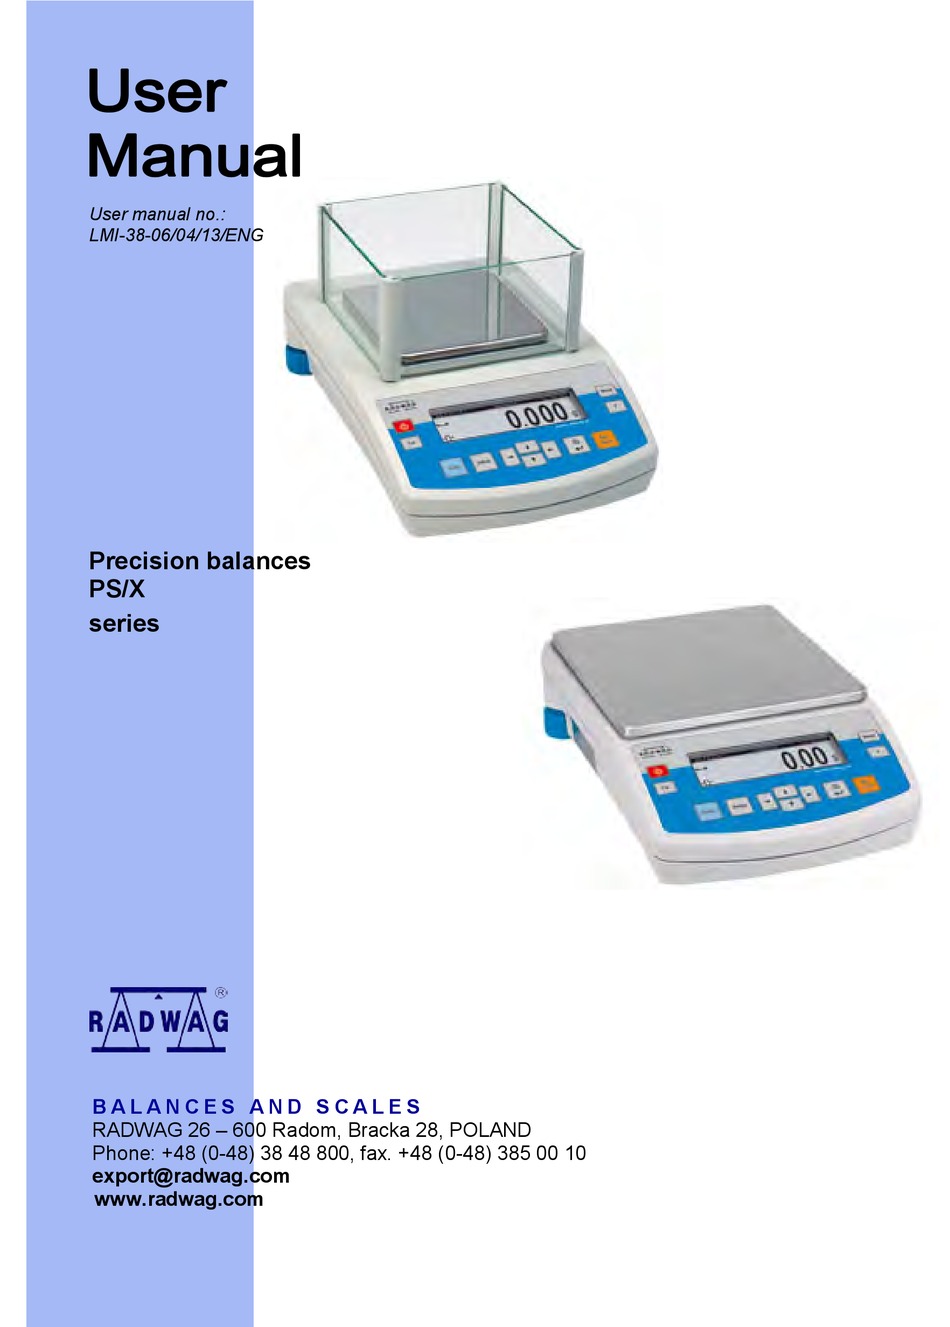 RADWAG PS/X SERIES USER MANUAL Pdf Download | ManualsLib